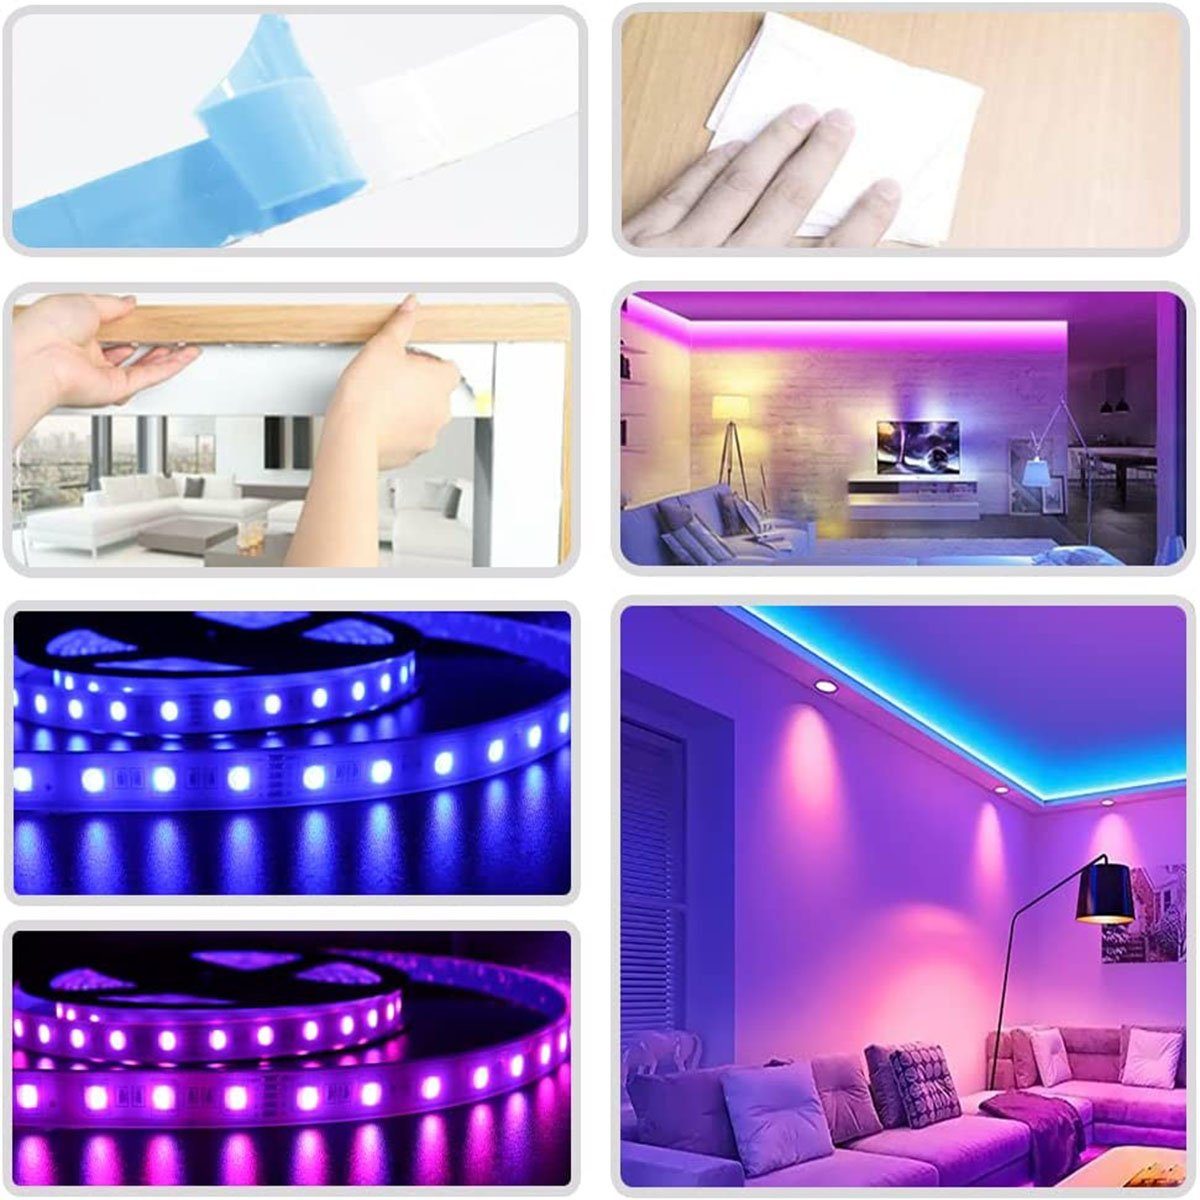 LED LED mit App-Steuerung, oyajia Streifen, Fernbedienung, Stripe Bluetooth Musikmodus, LEDs Timer-Einstellung, -300 Dimmbar Band 5m/10m RGB LED 10M Farbwechsel